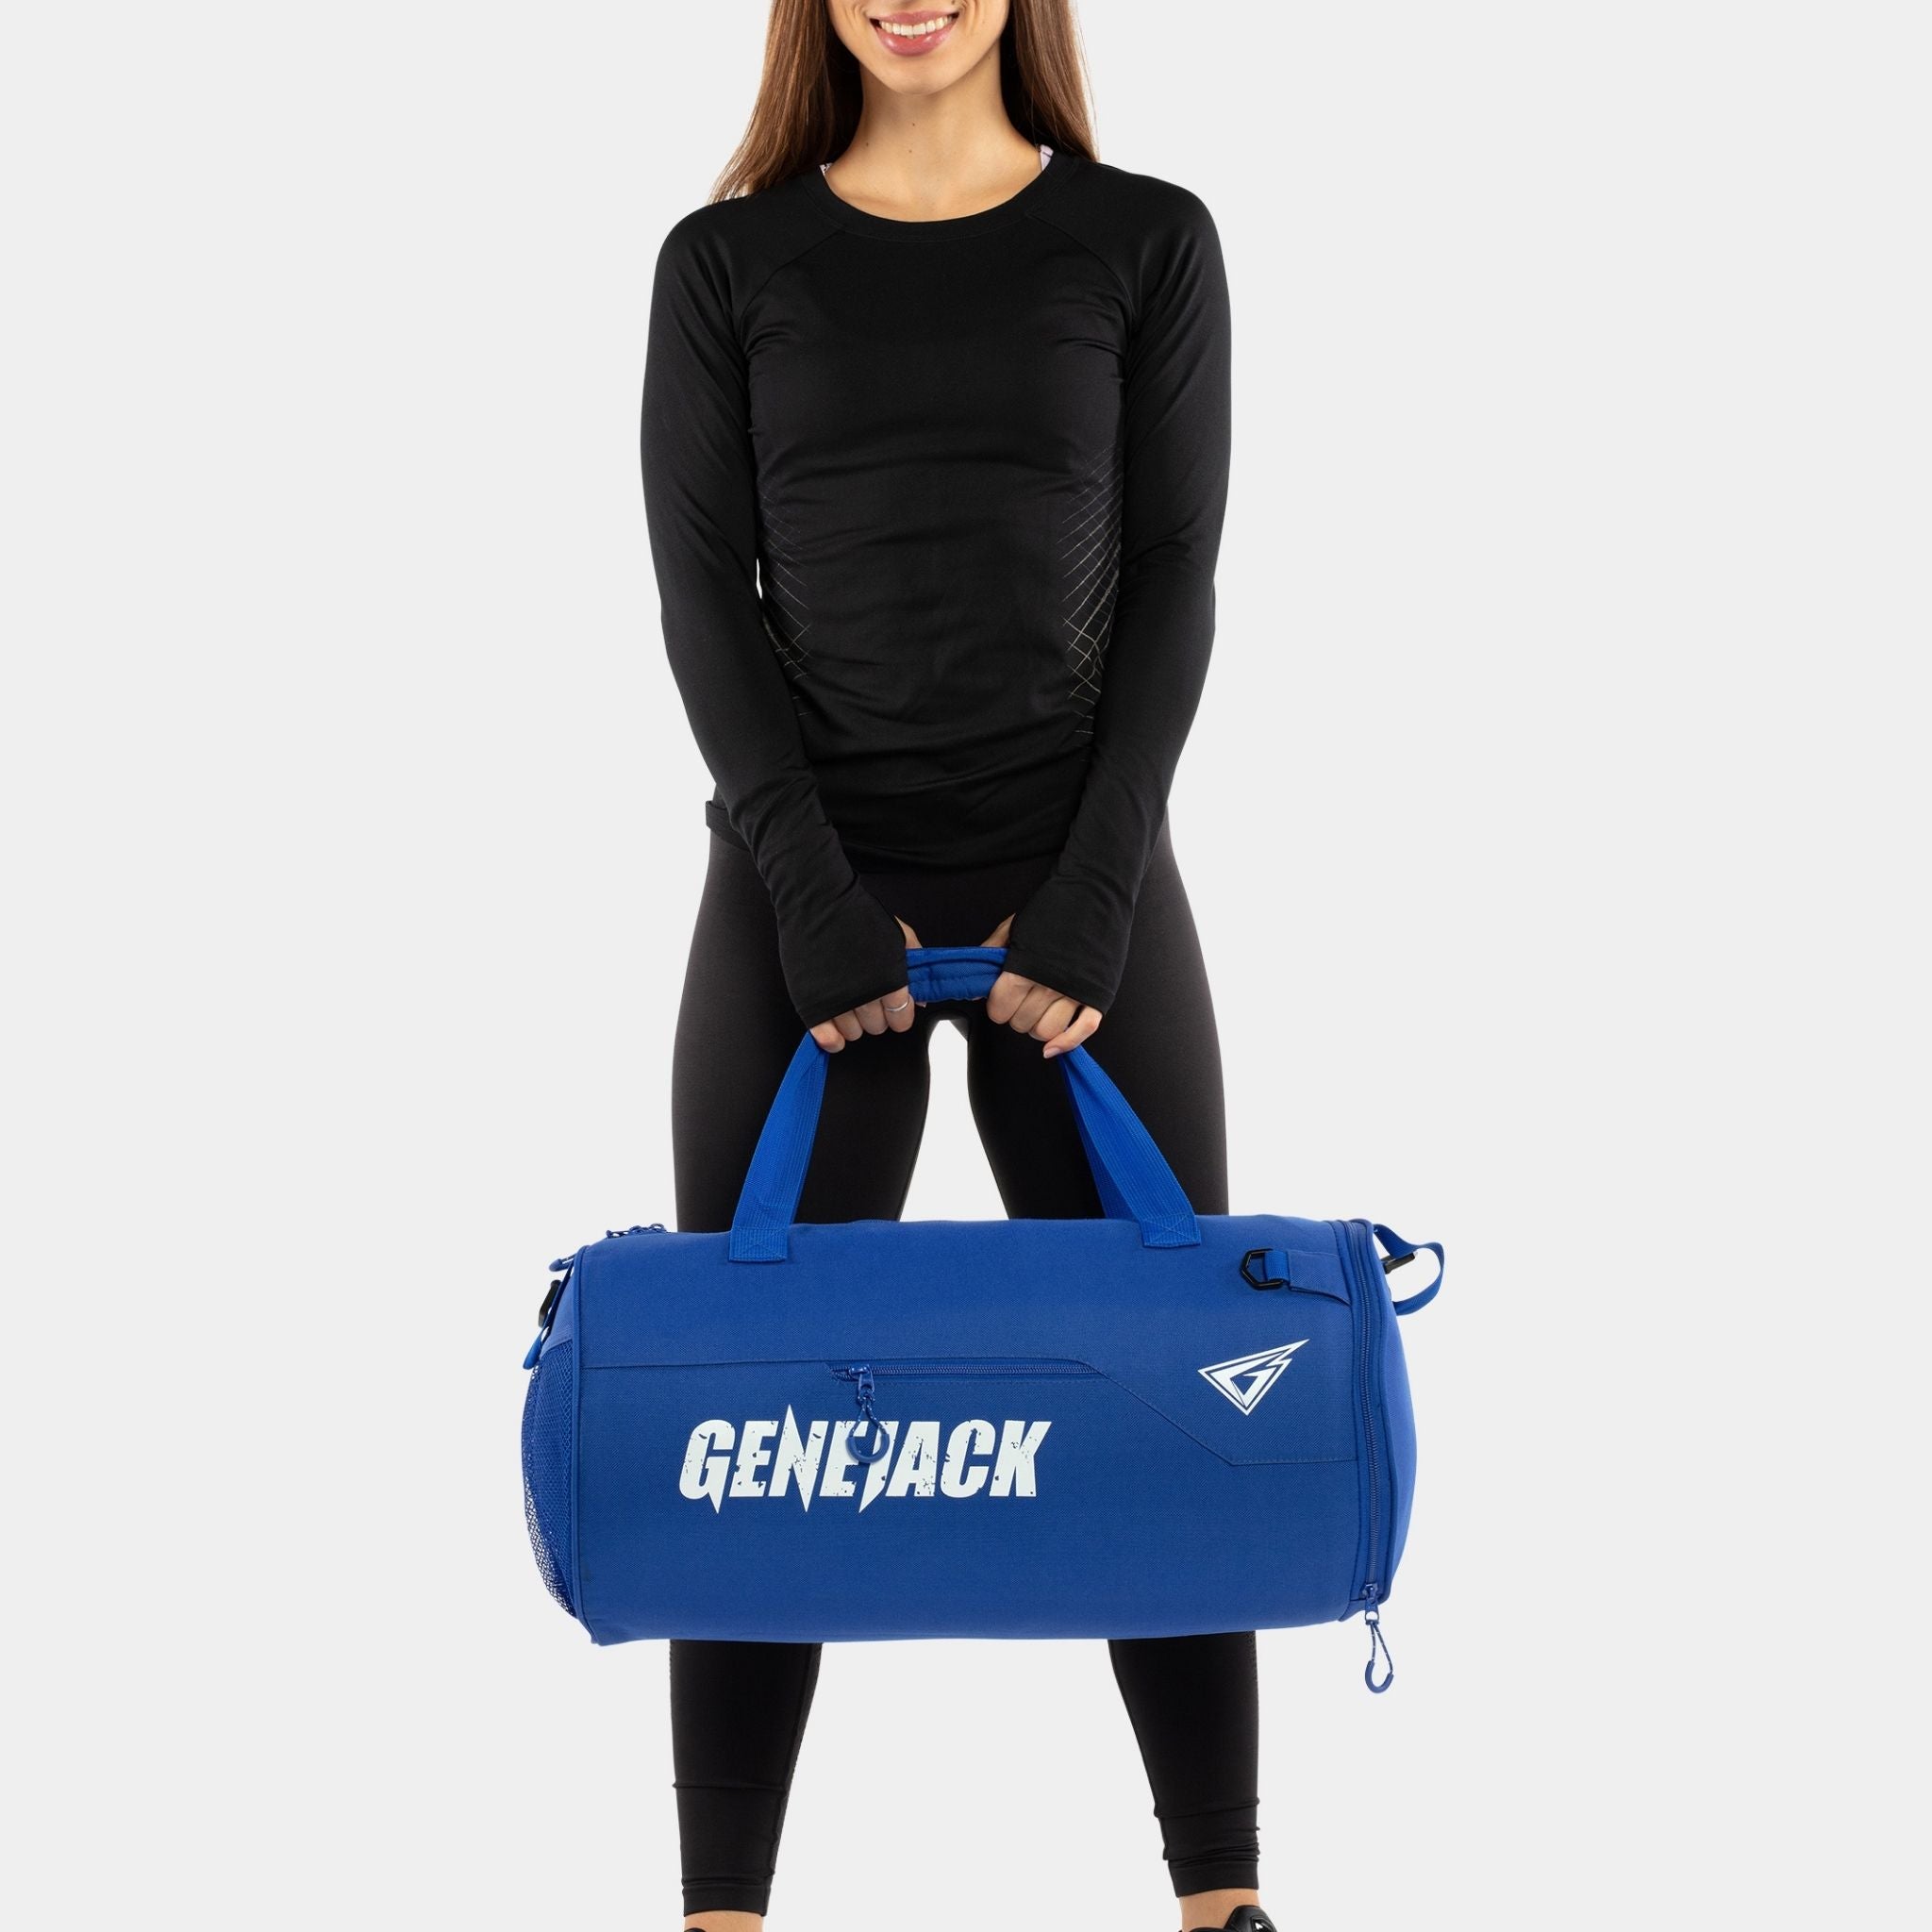 Duffel Bag 1.0 - Blue from Genejack for Genejack WOD